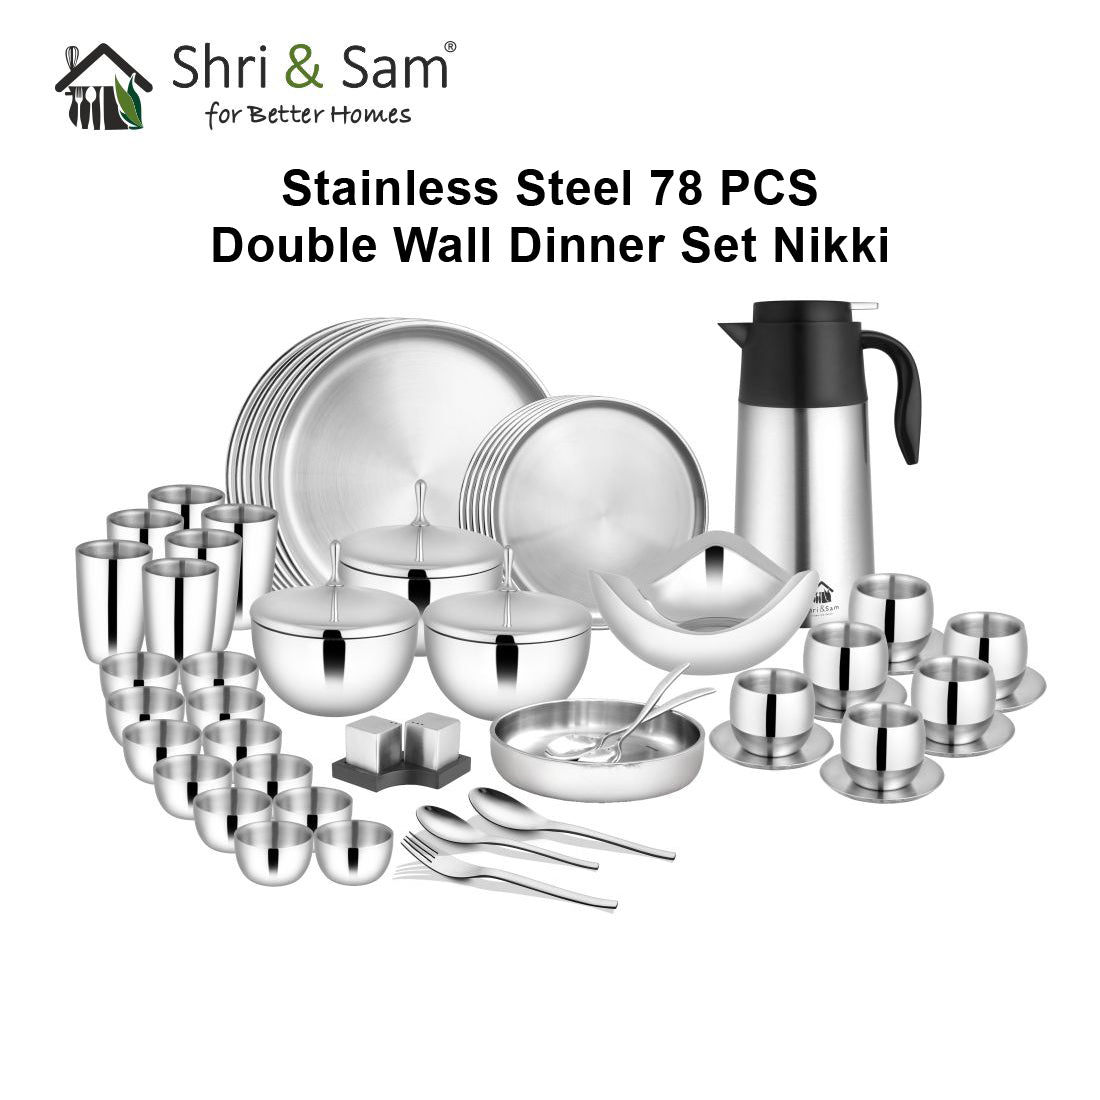 Stainless Steel 78 PCS Double Wall Dinner Set (6 People) Nikki